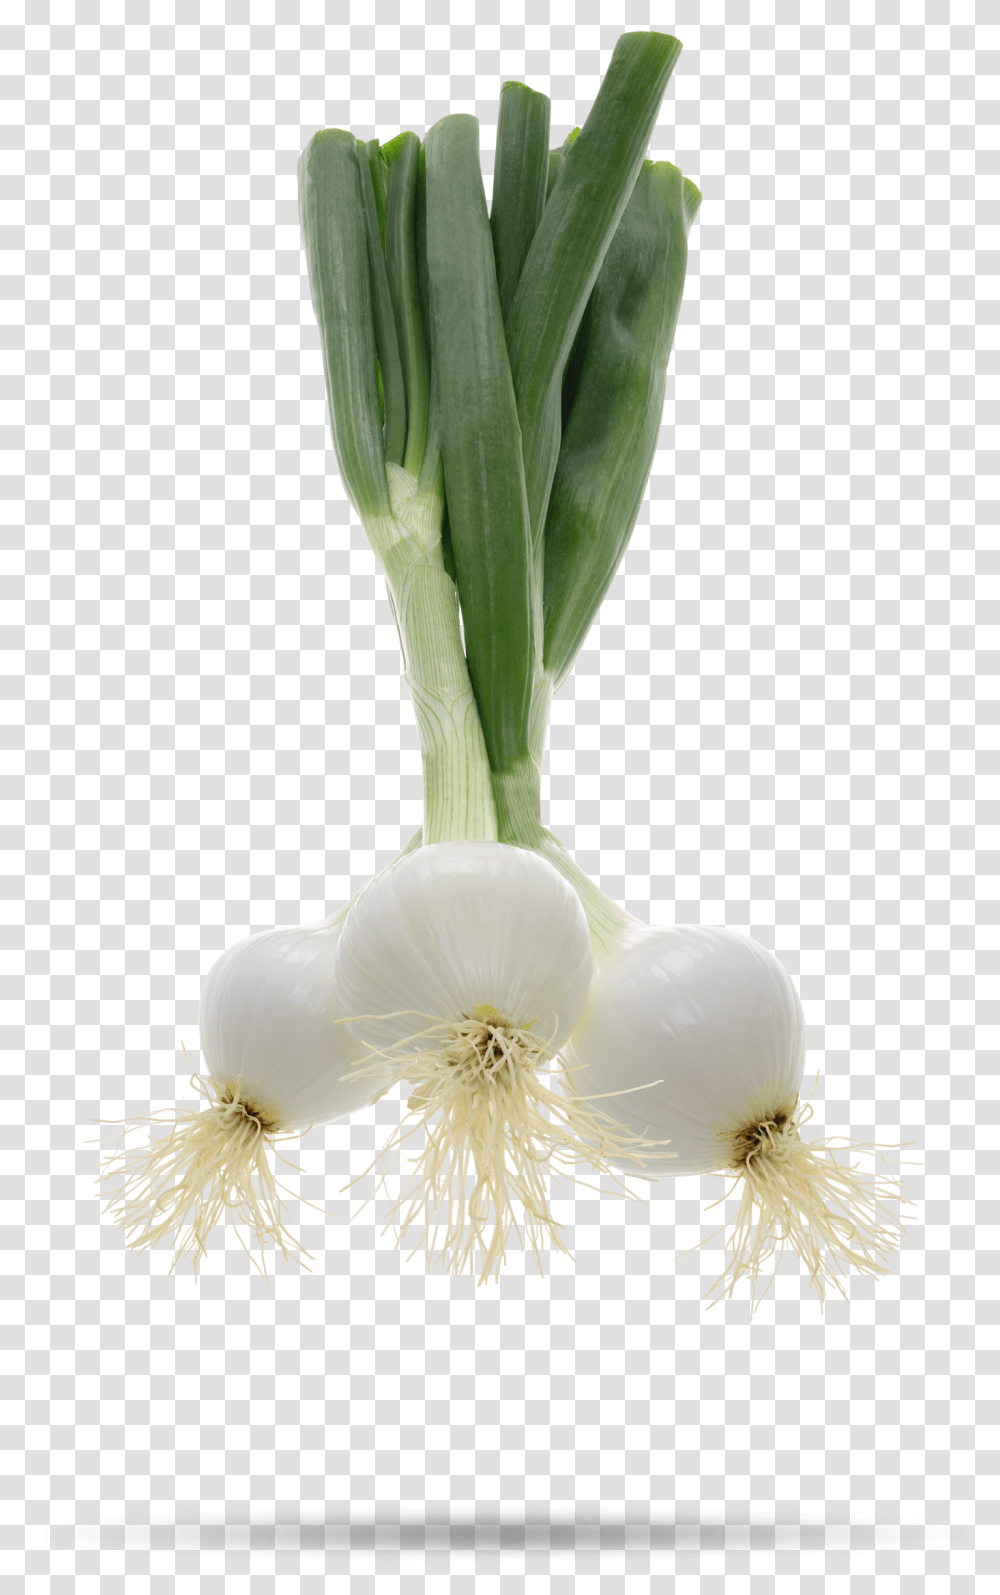 Welsh Onion, Plant, Food, Vegetable, Produce Transparent Png